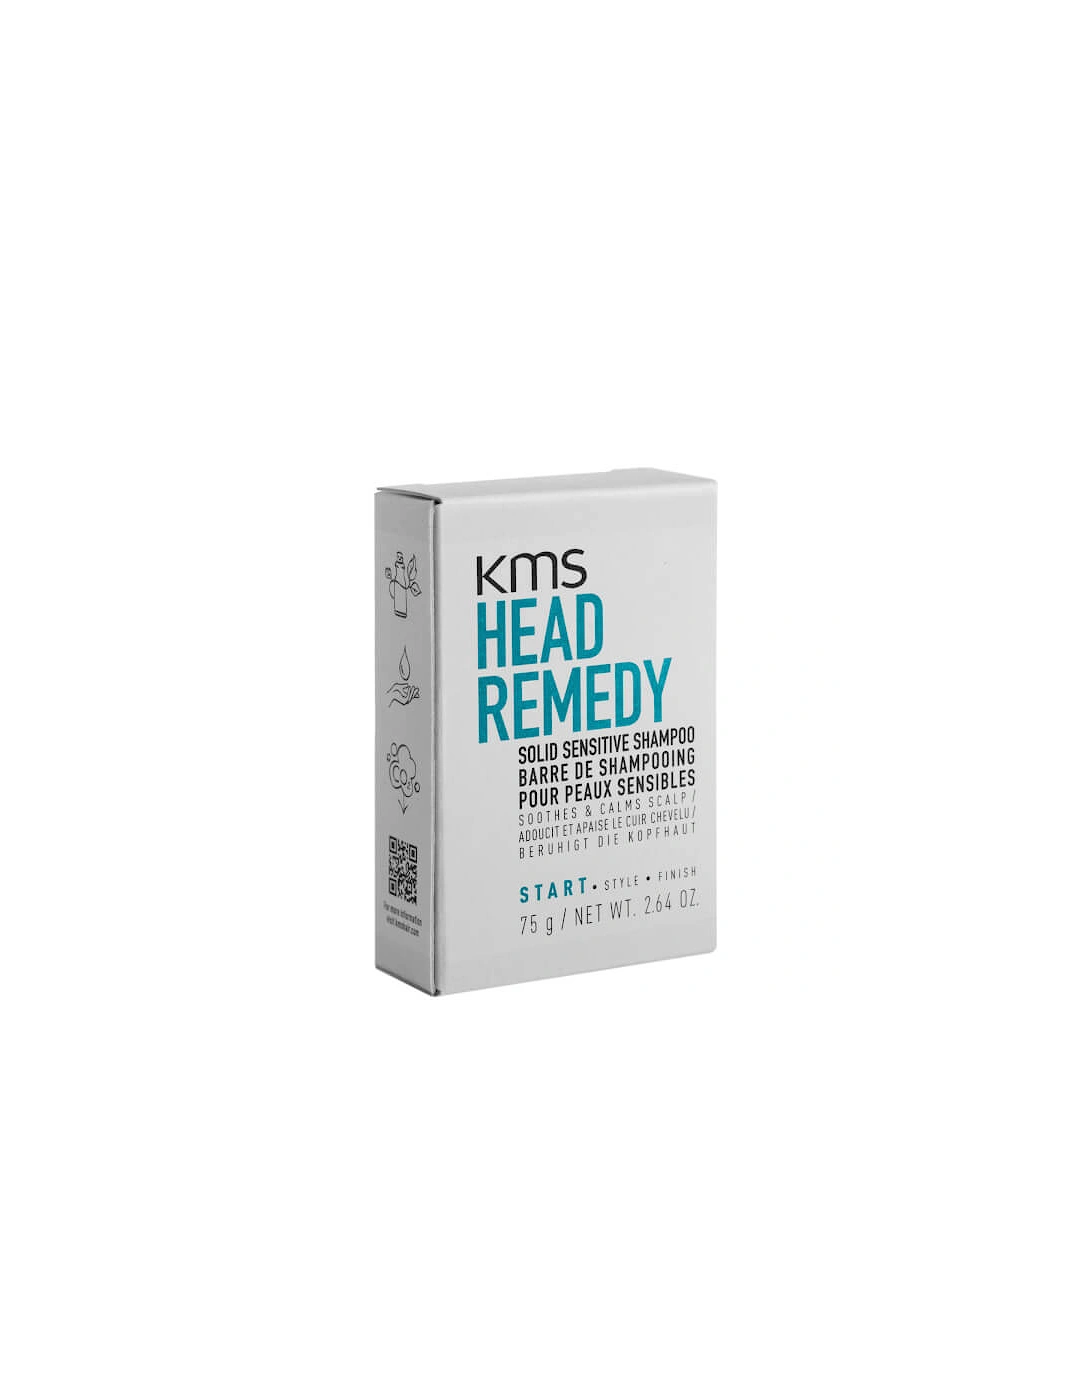 Head Remedy Solid Sensitive Shampoo 75g - KMS, 2 of 1